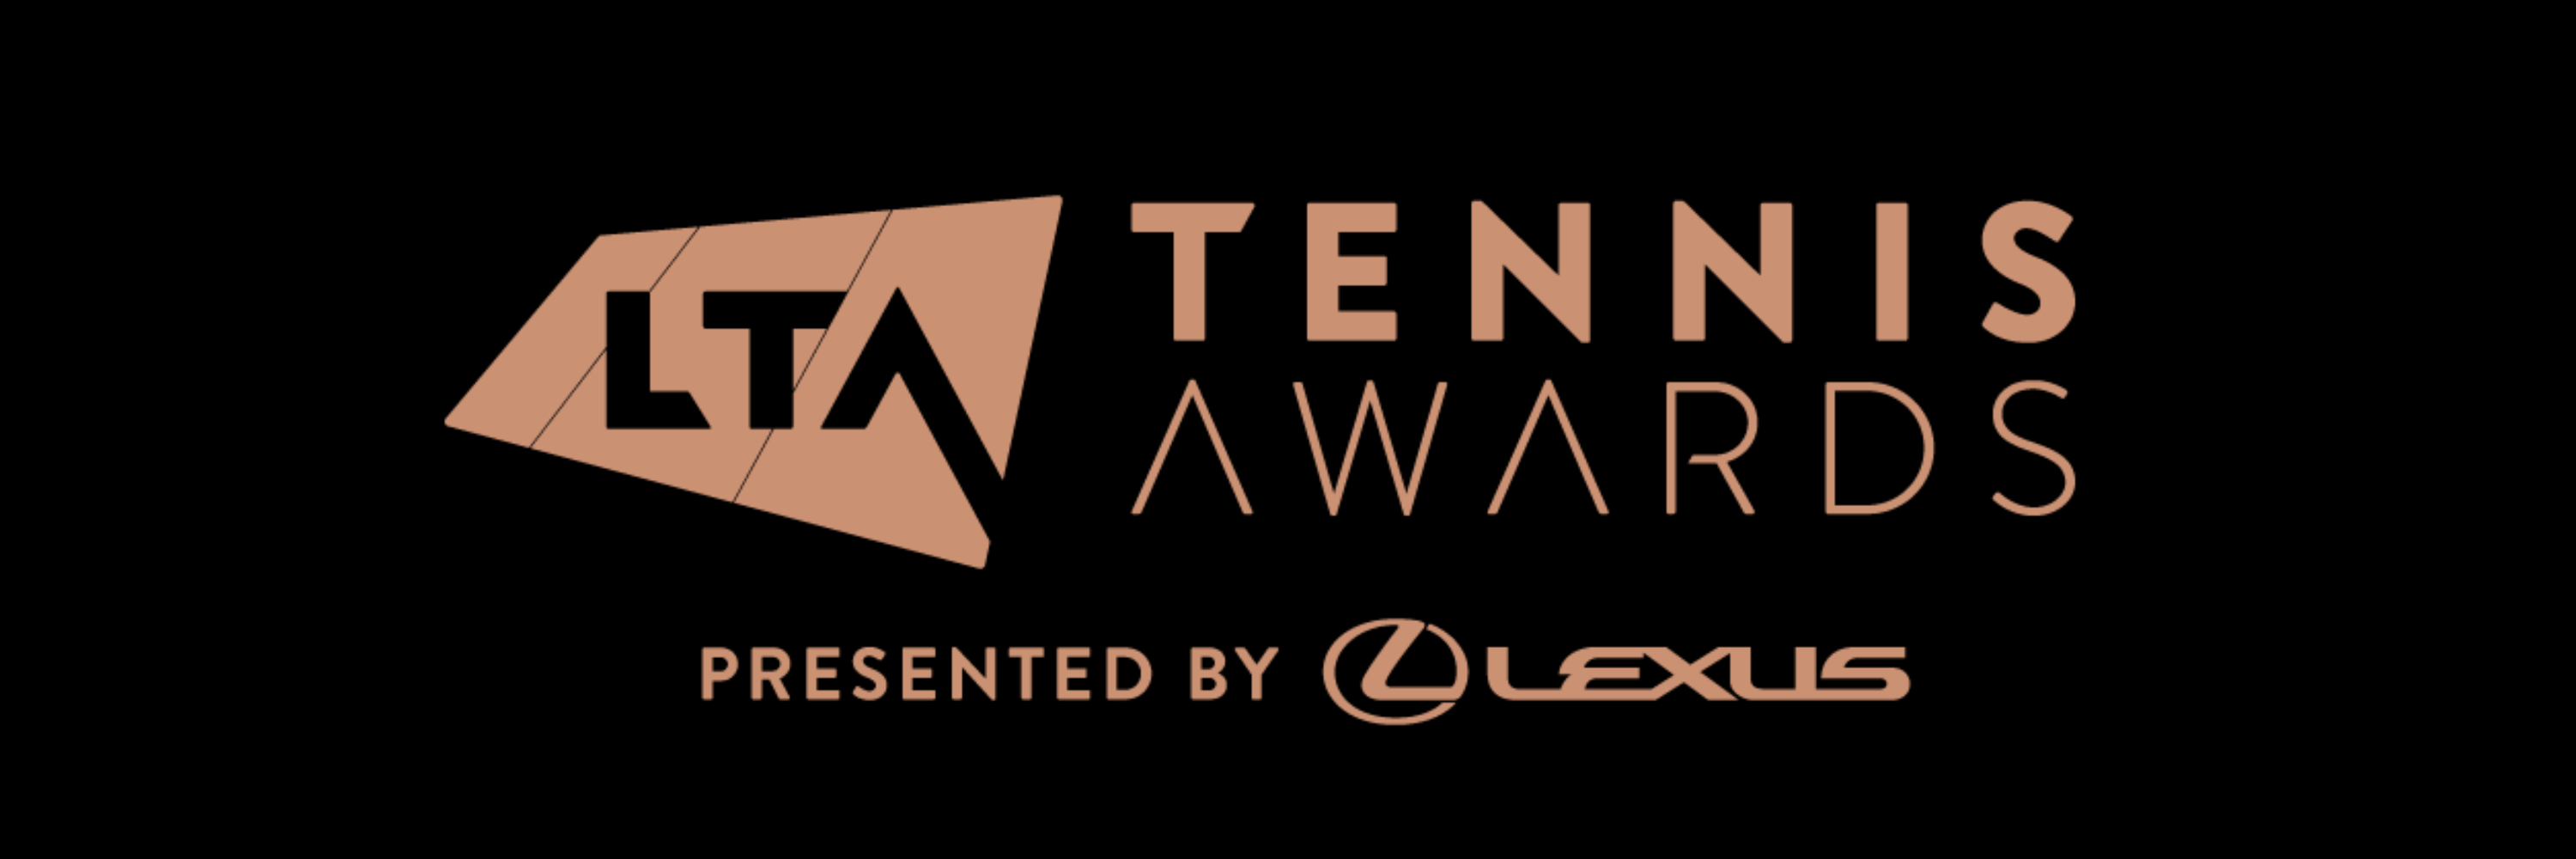 lta tennis awards (3000 x 1000 px)